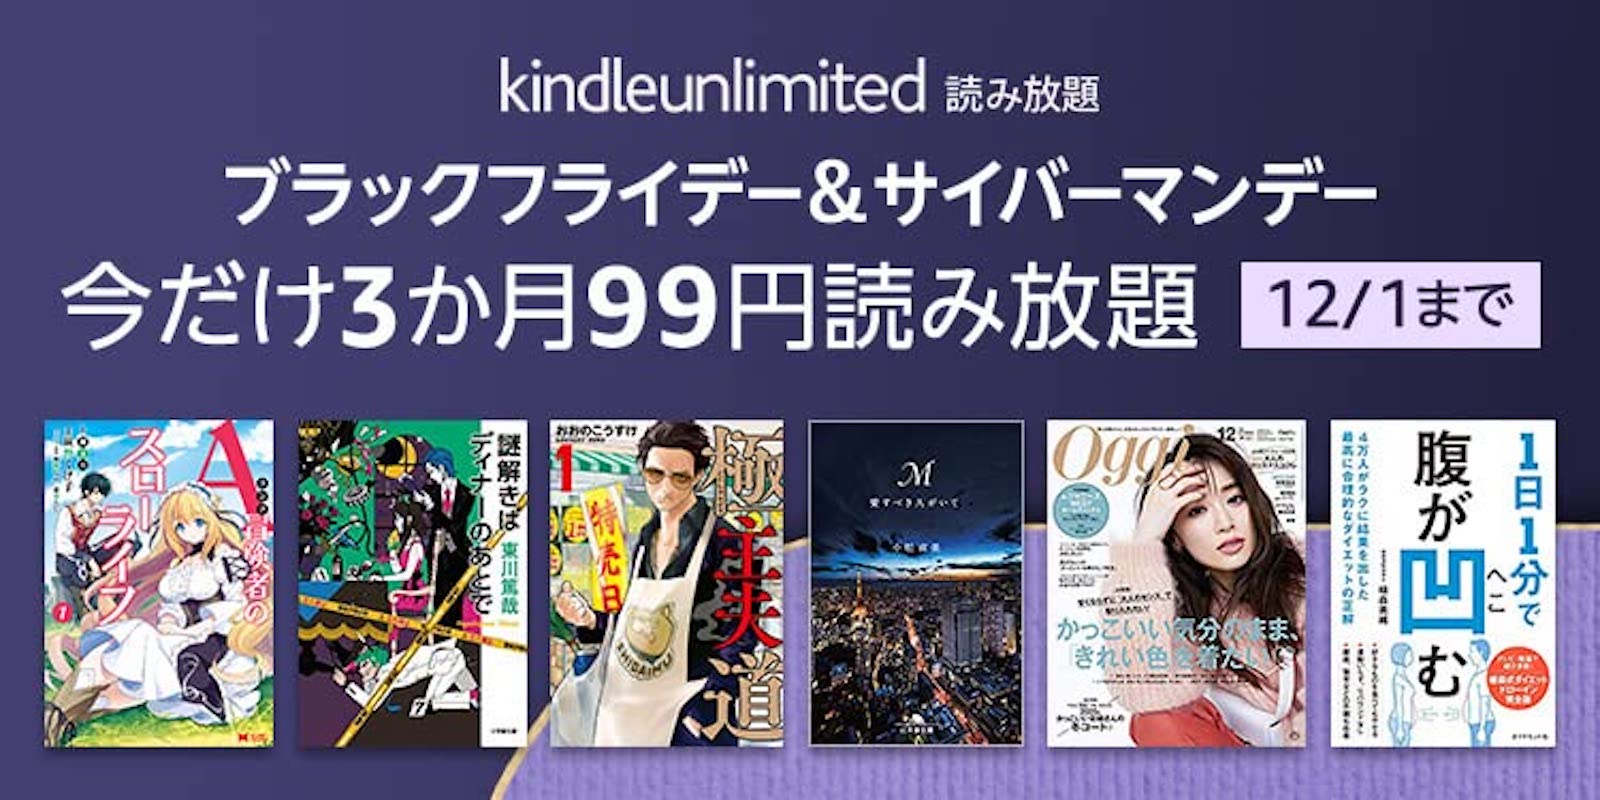 Kindle-Unlimited-3month-sale.jpg